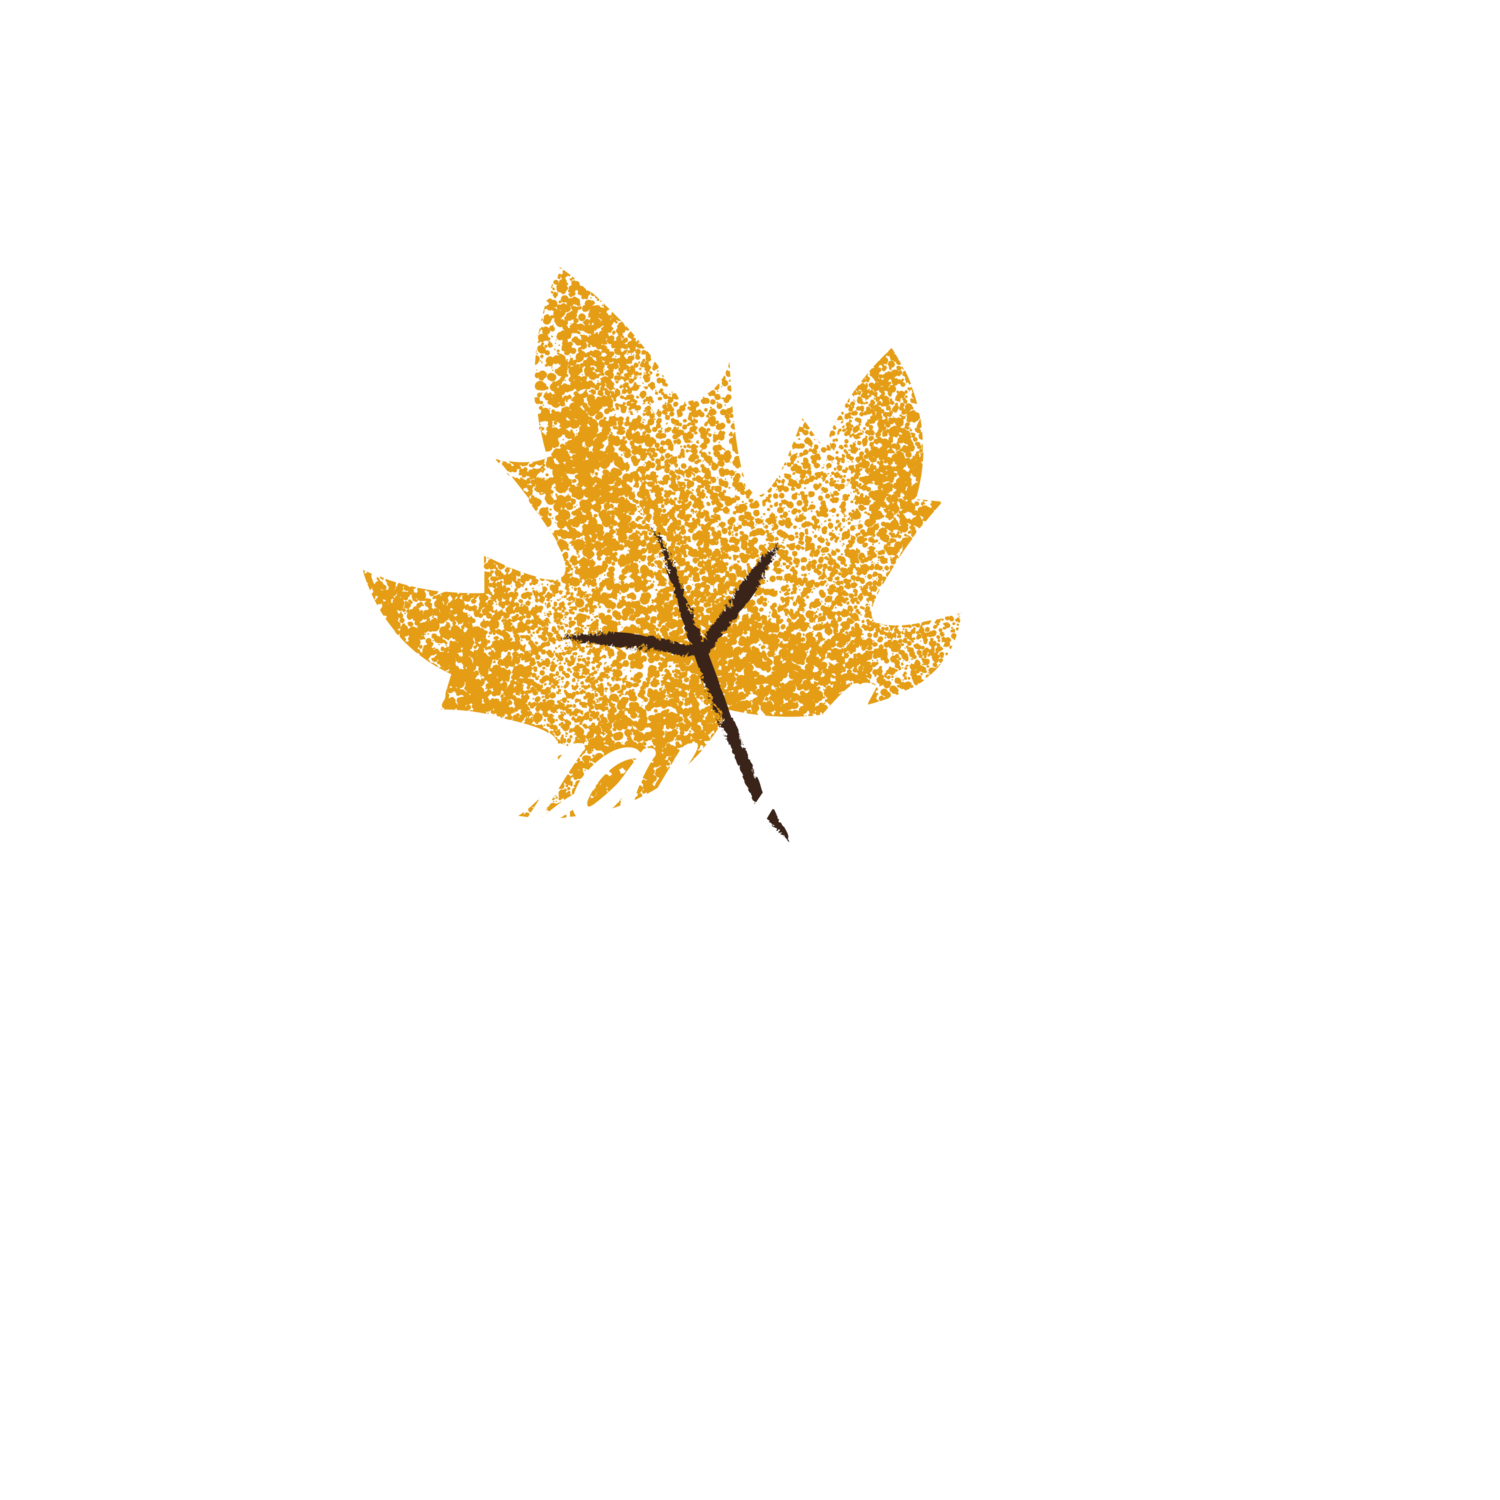 Sugar Maple Photo